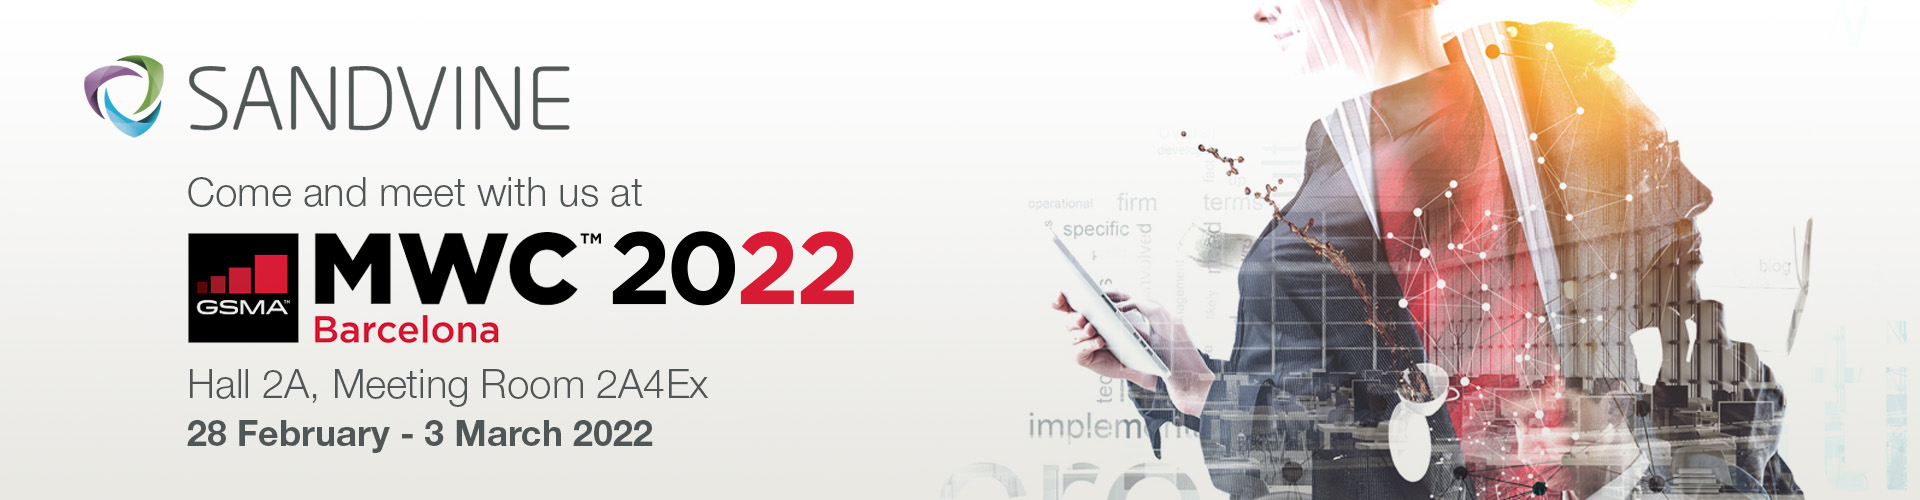 MWC 2022 Landing Page Banner v2